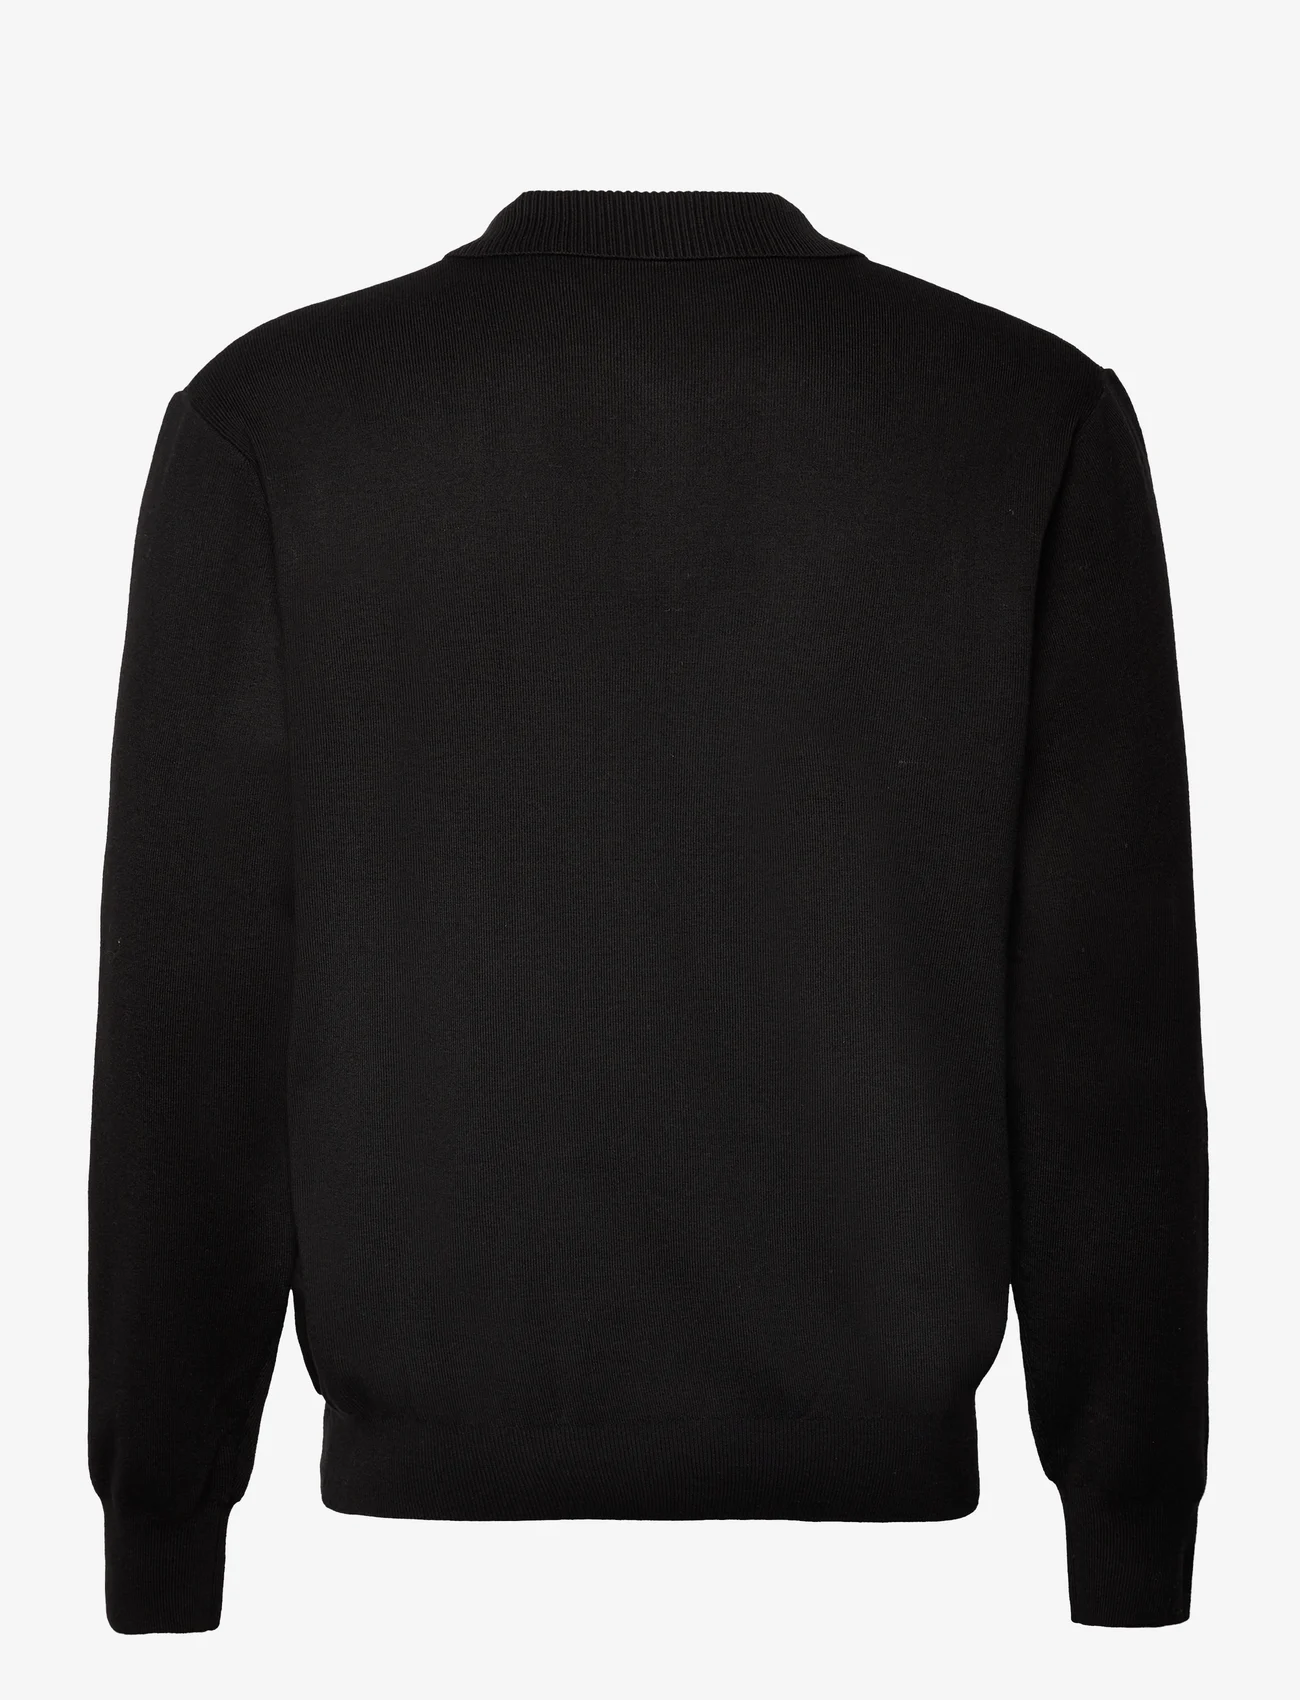 Mango - Polo collar wool sweater - stickade pikéer - black - 1